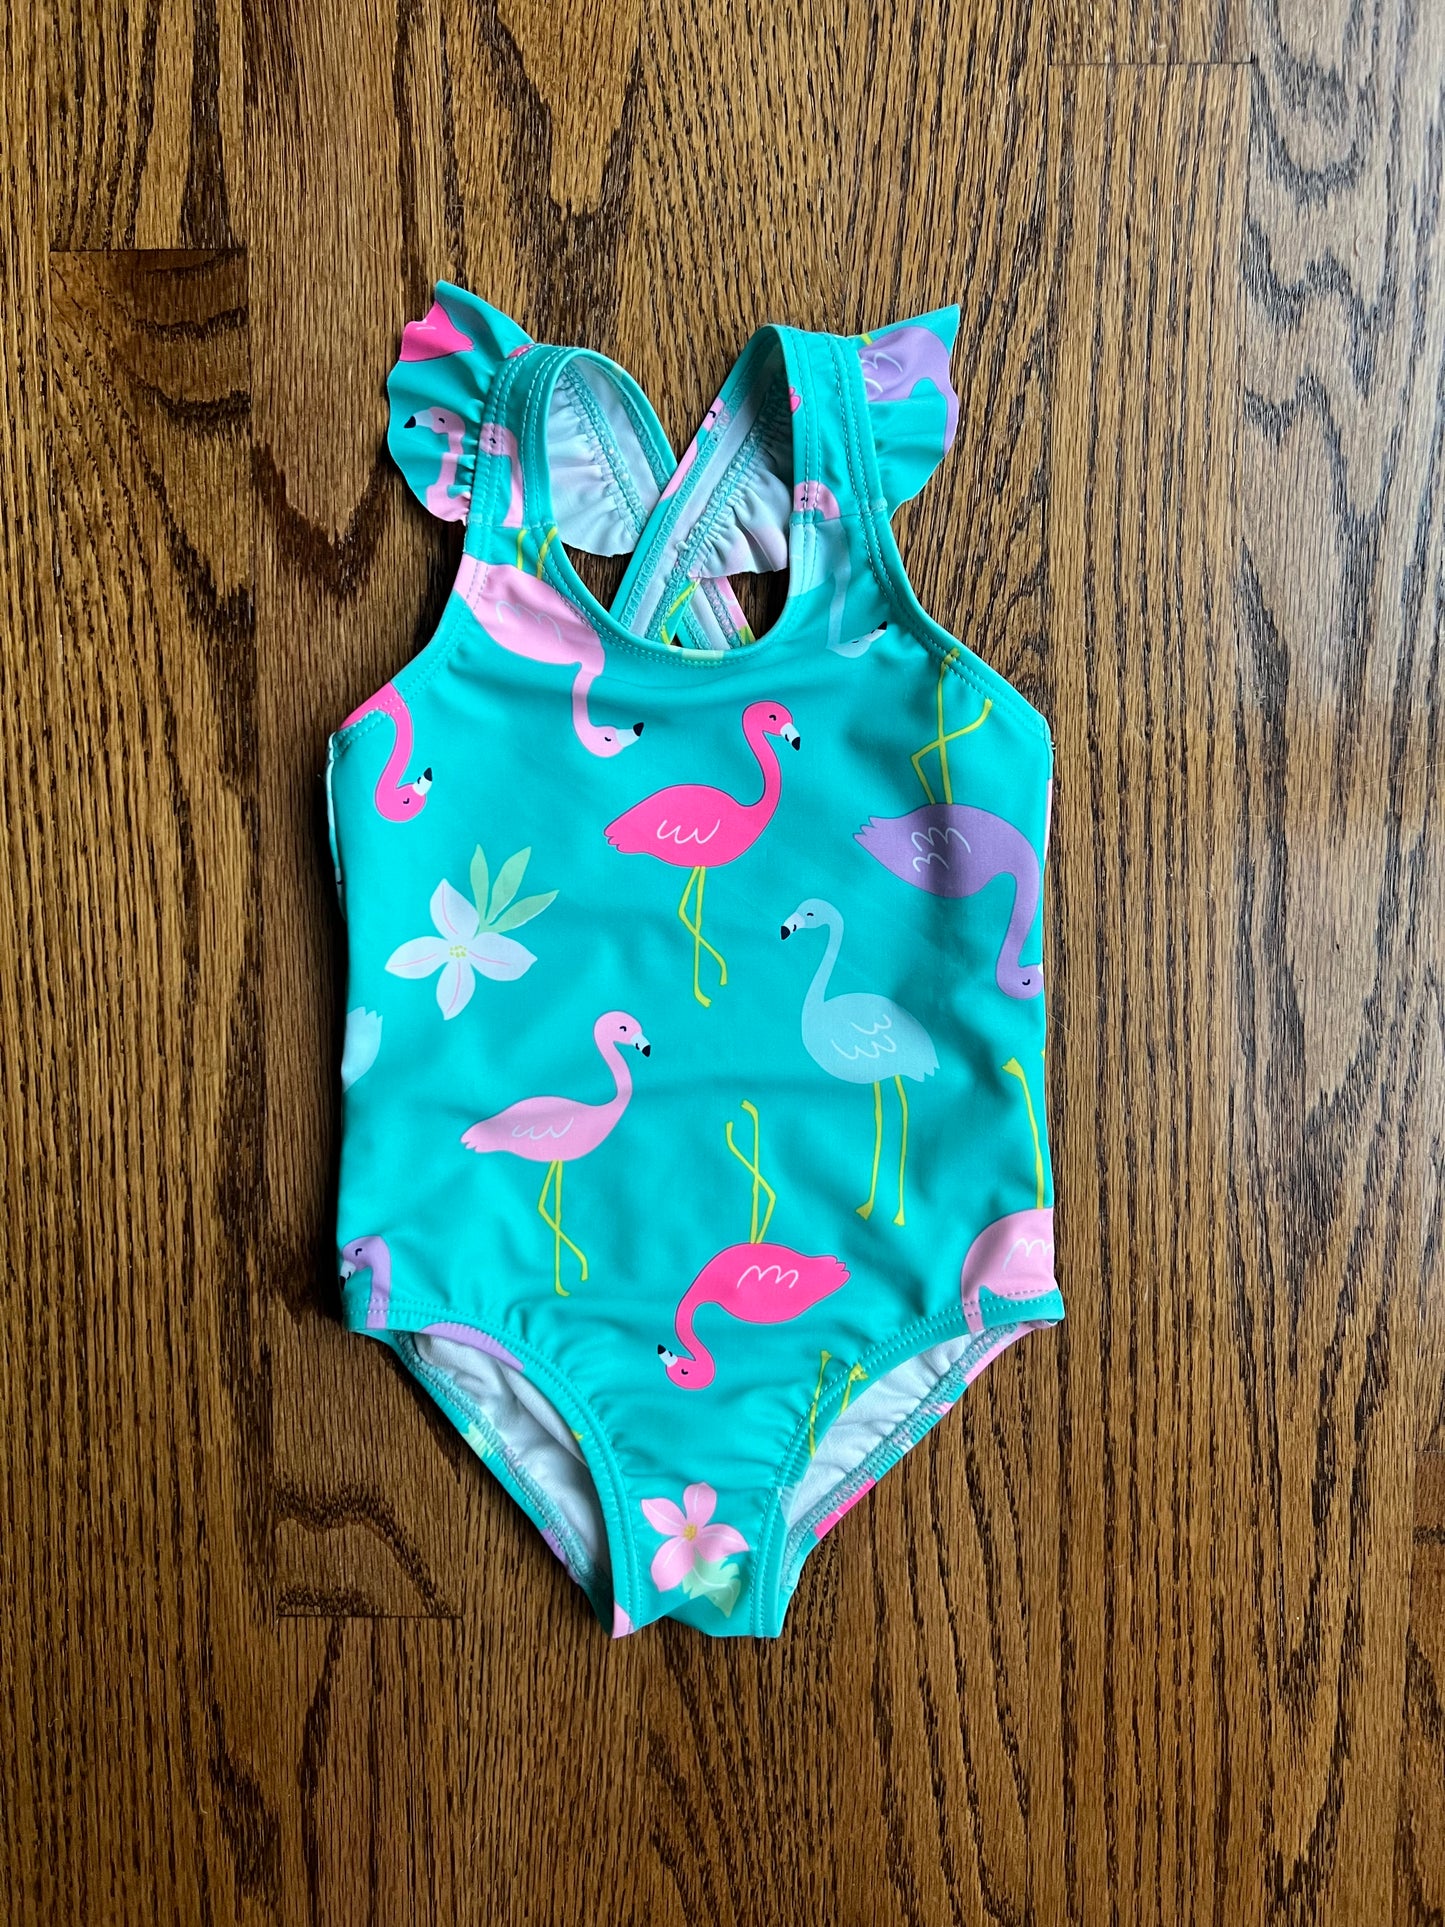 Carters Baby Girl 12M Flamingo Swimsuit, NWOT